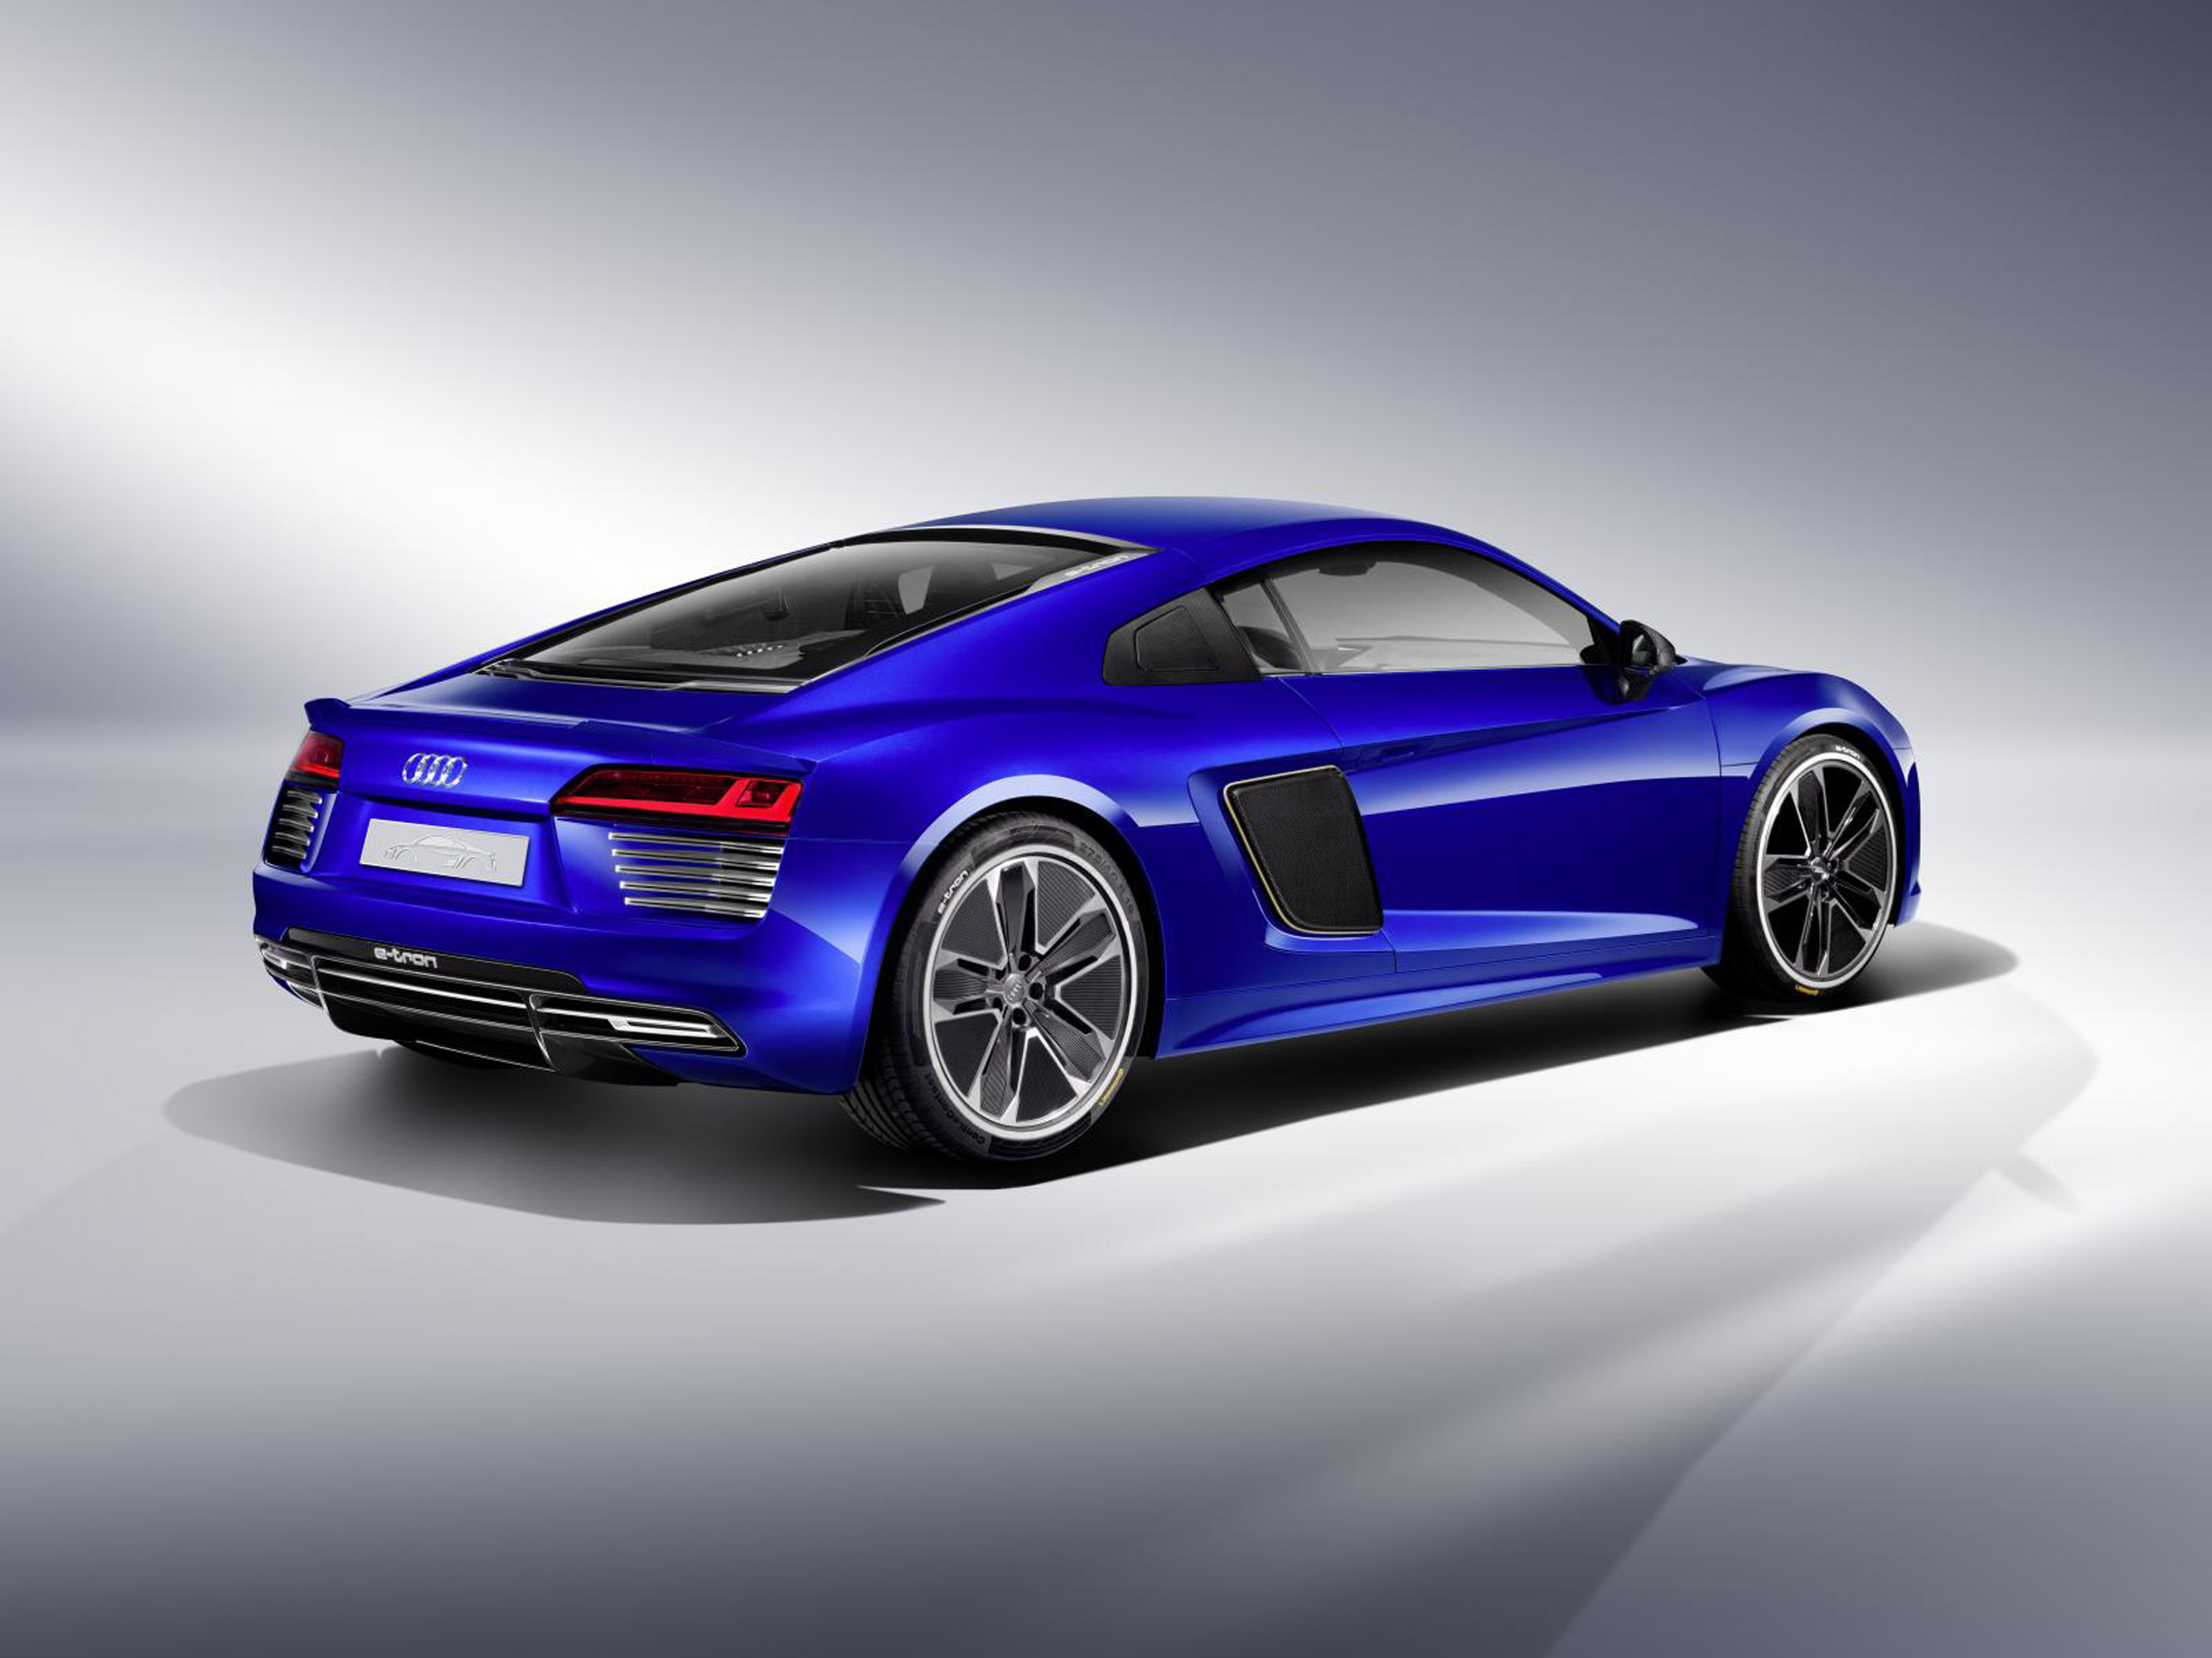 The Audi R8 e-tron Piloted Driving Concept Car